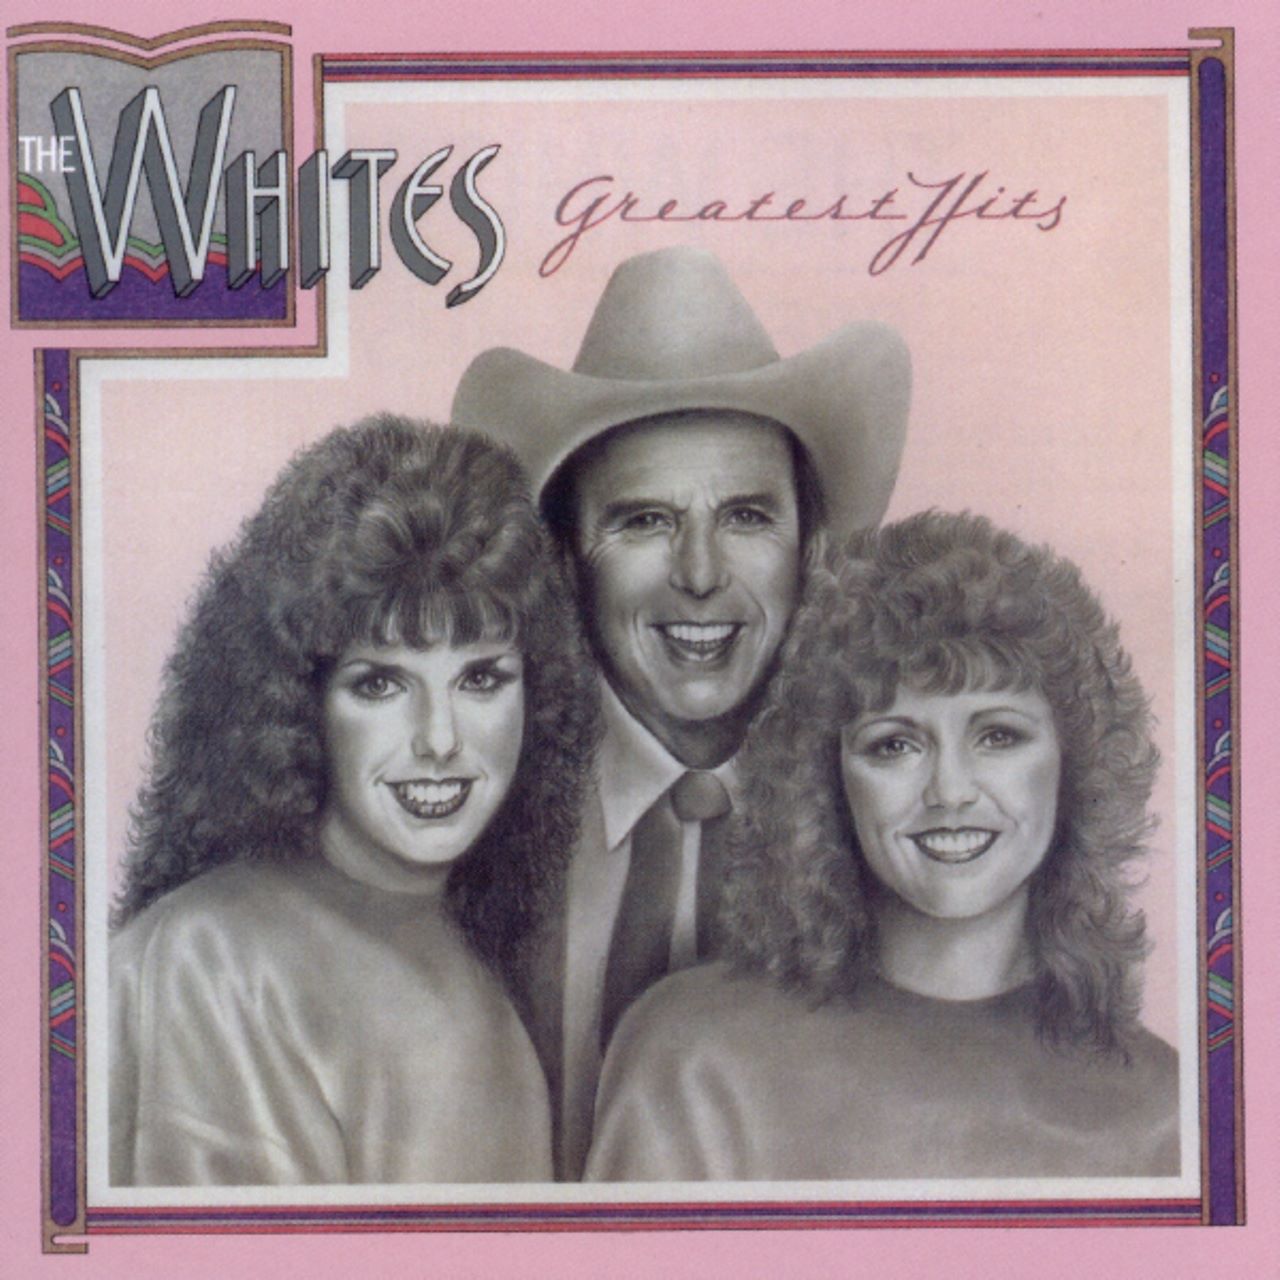 Whites - Greatest Hits cover album